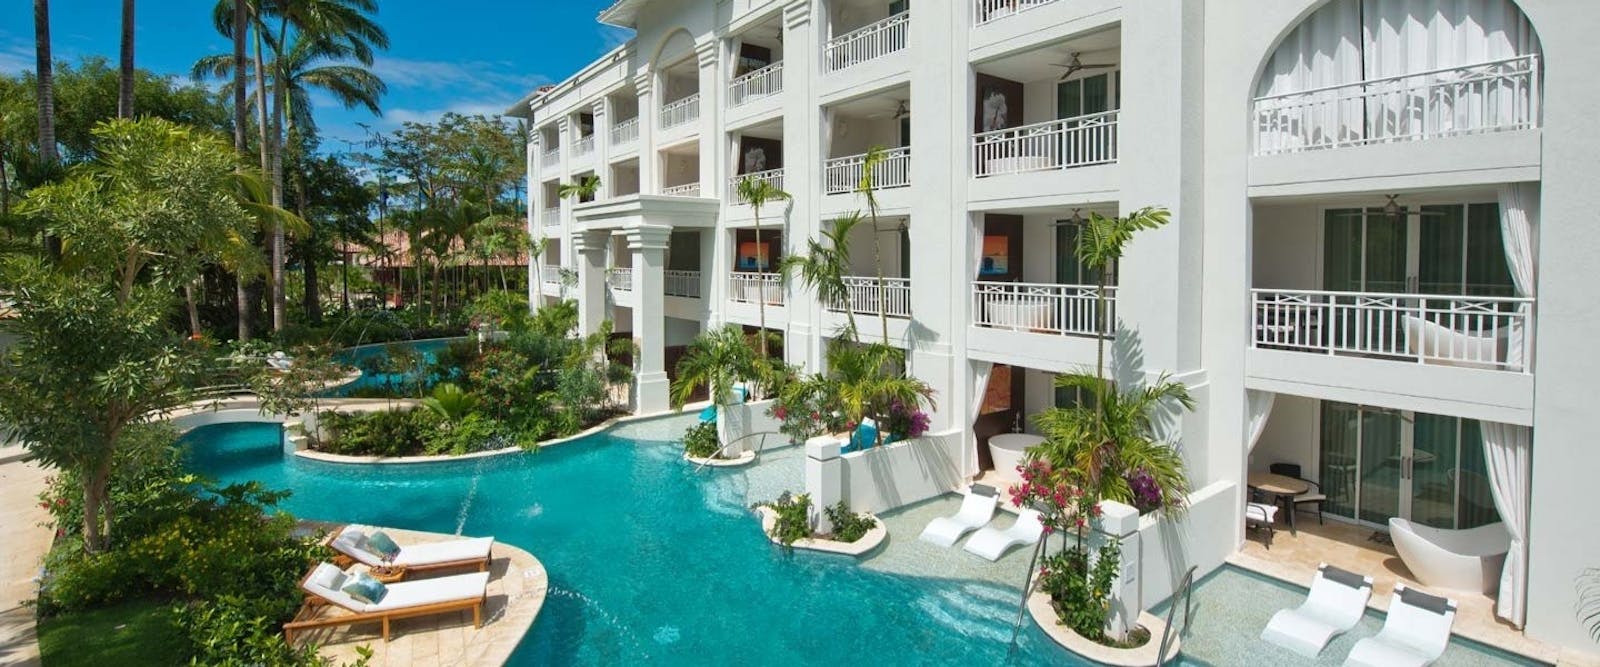 Sandals Royal Barbados All Inclusive Resort Inspiring Travel Company 7582